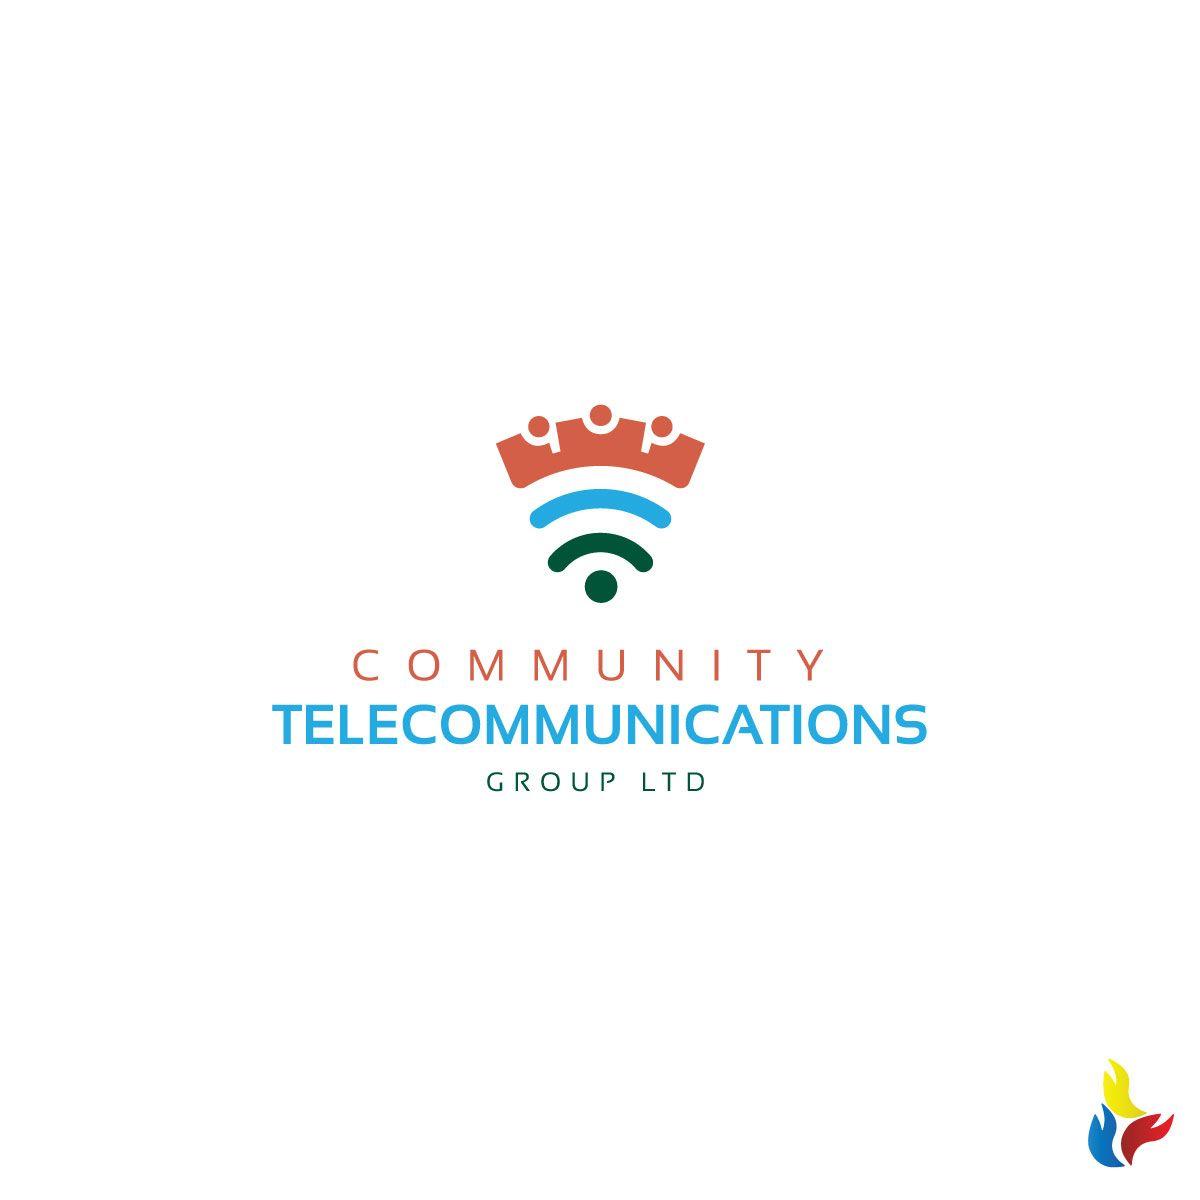 Telecommunications Logo - Bold, Serious, Telecommunications Logo Design for Community